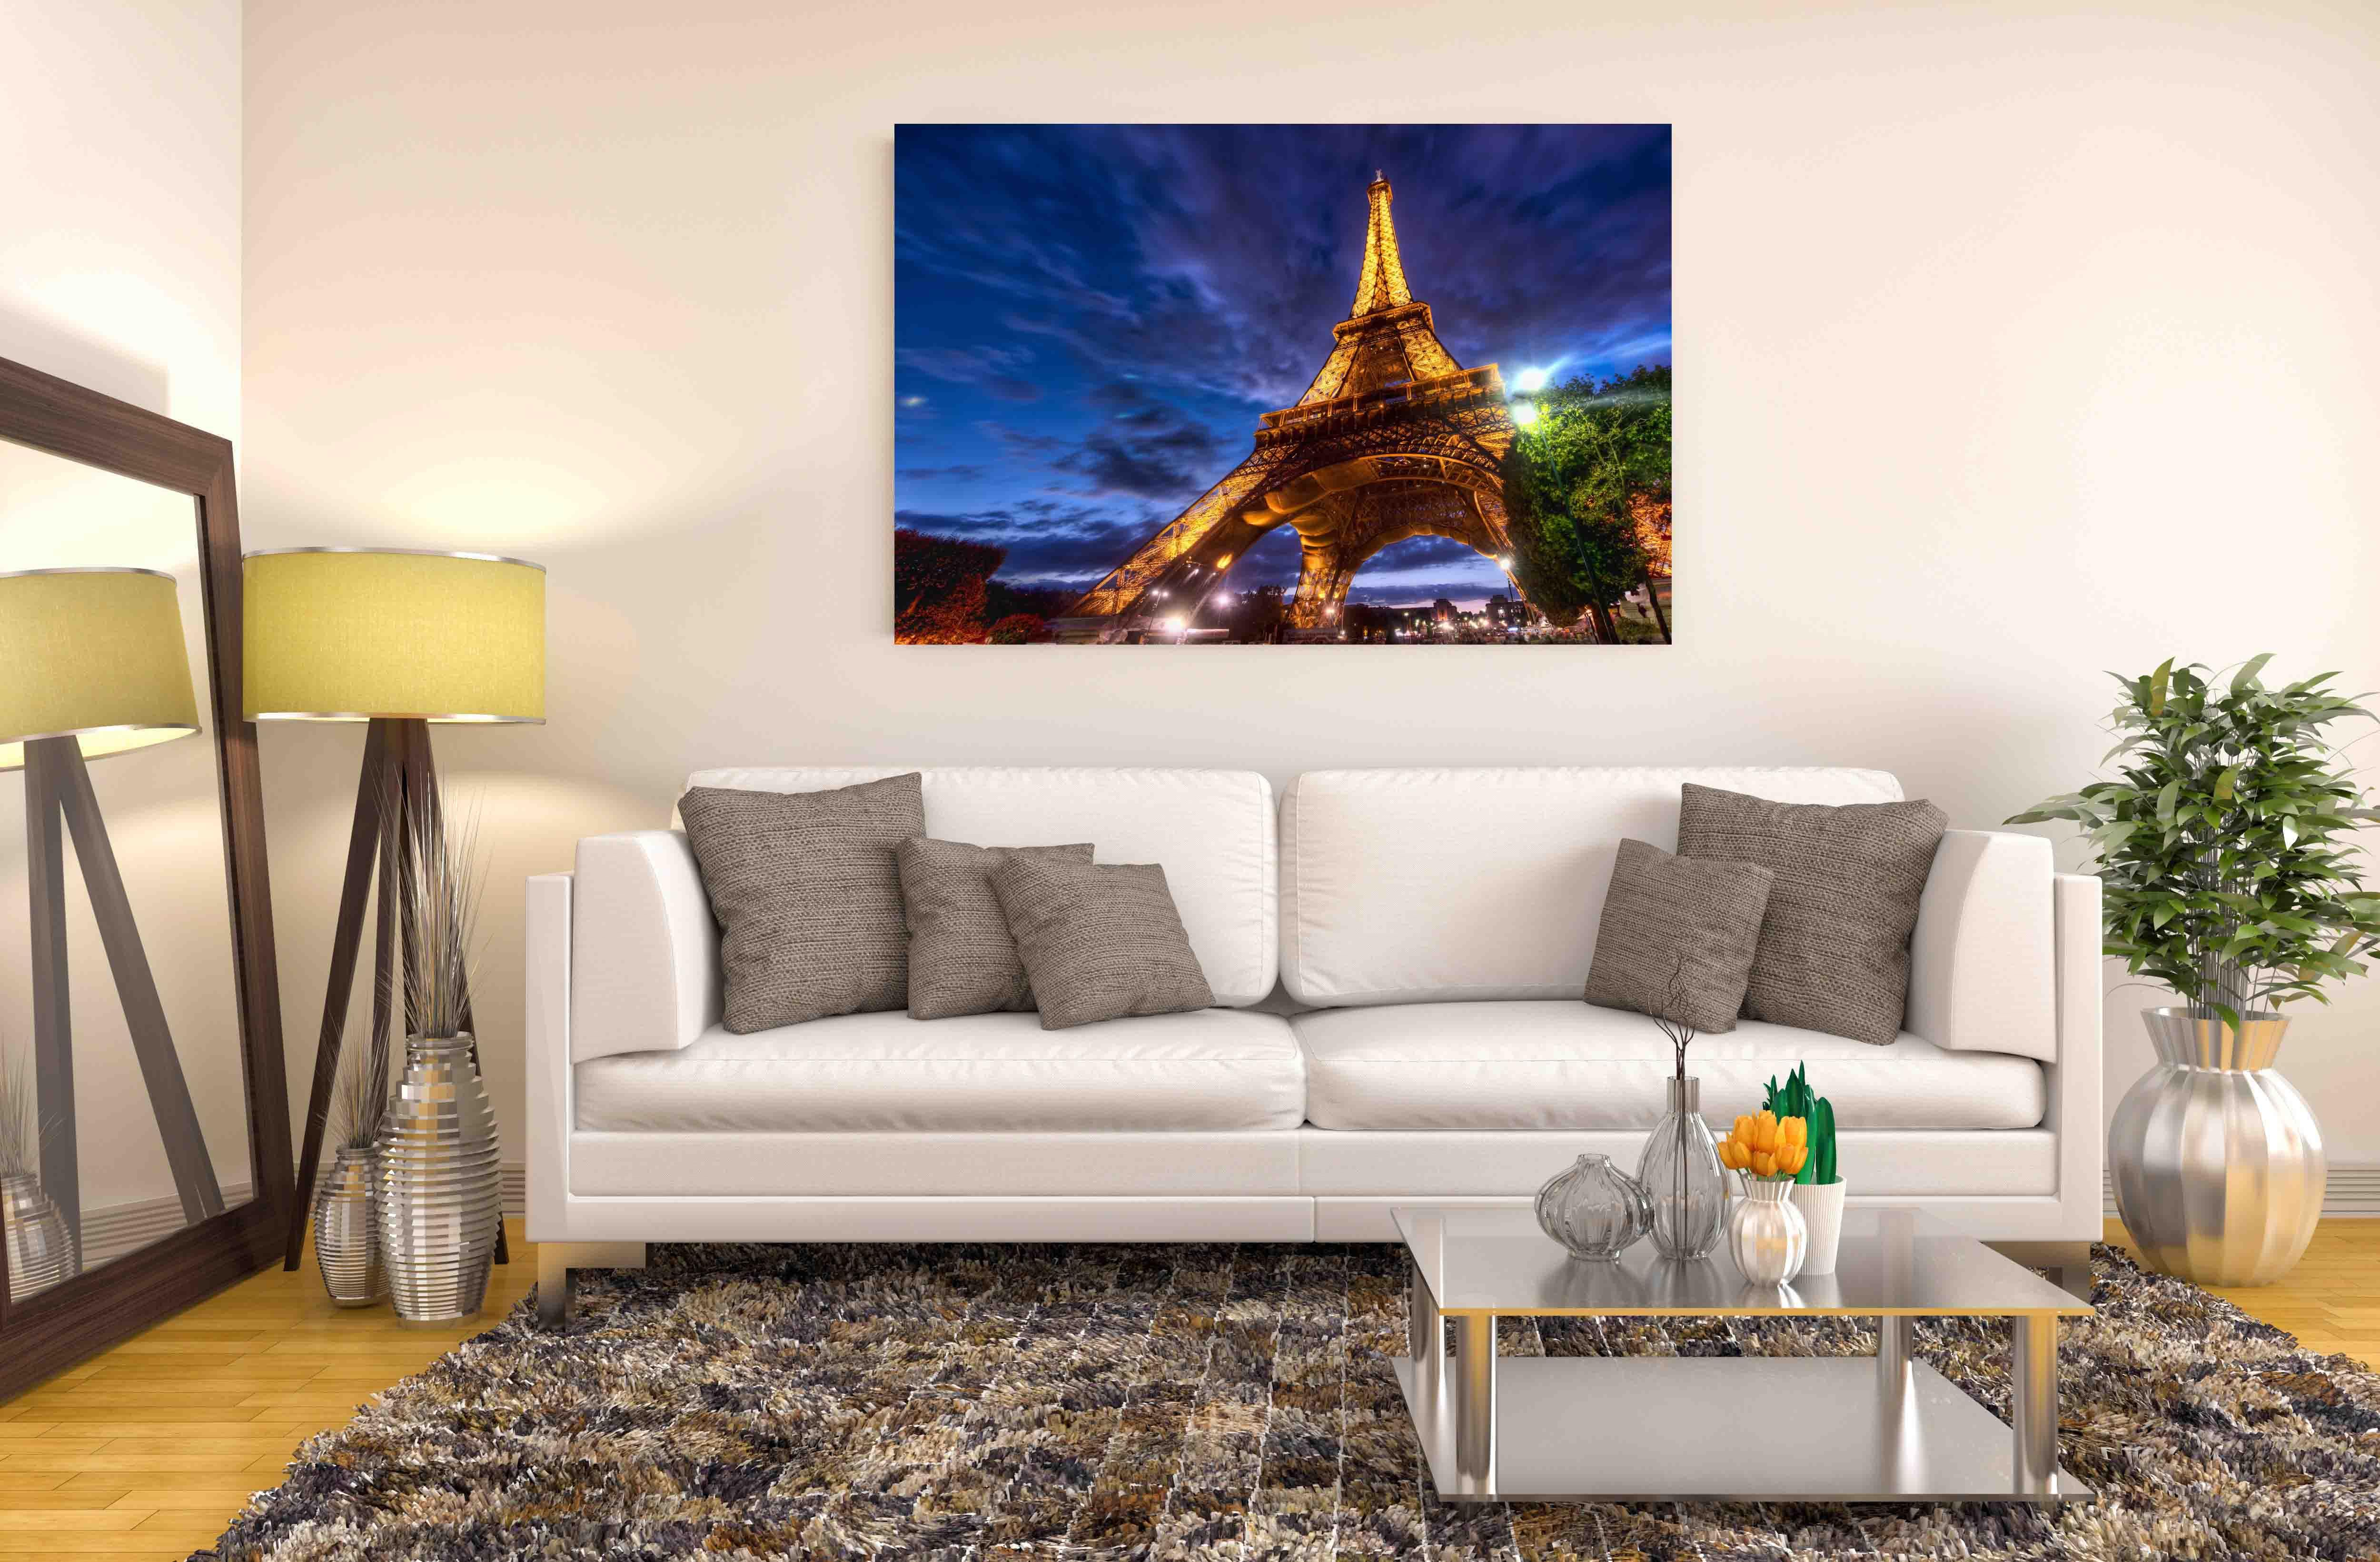 Picture Photograph - Eiffel Tower in Paris 2